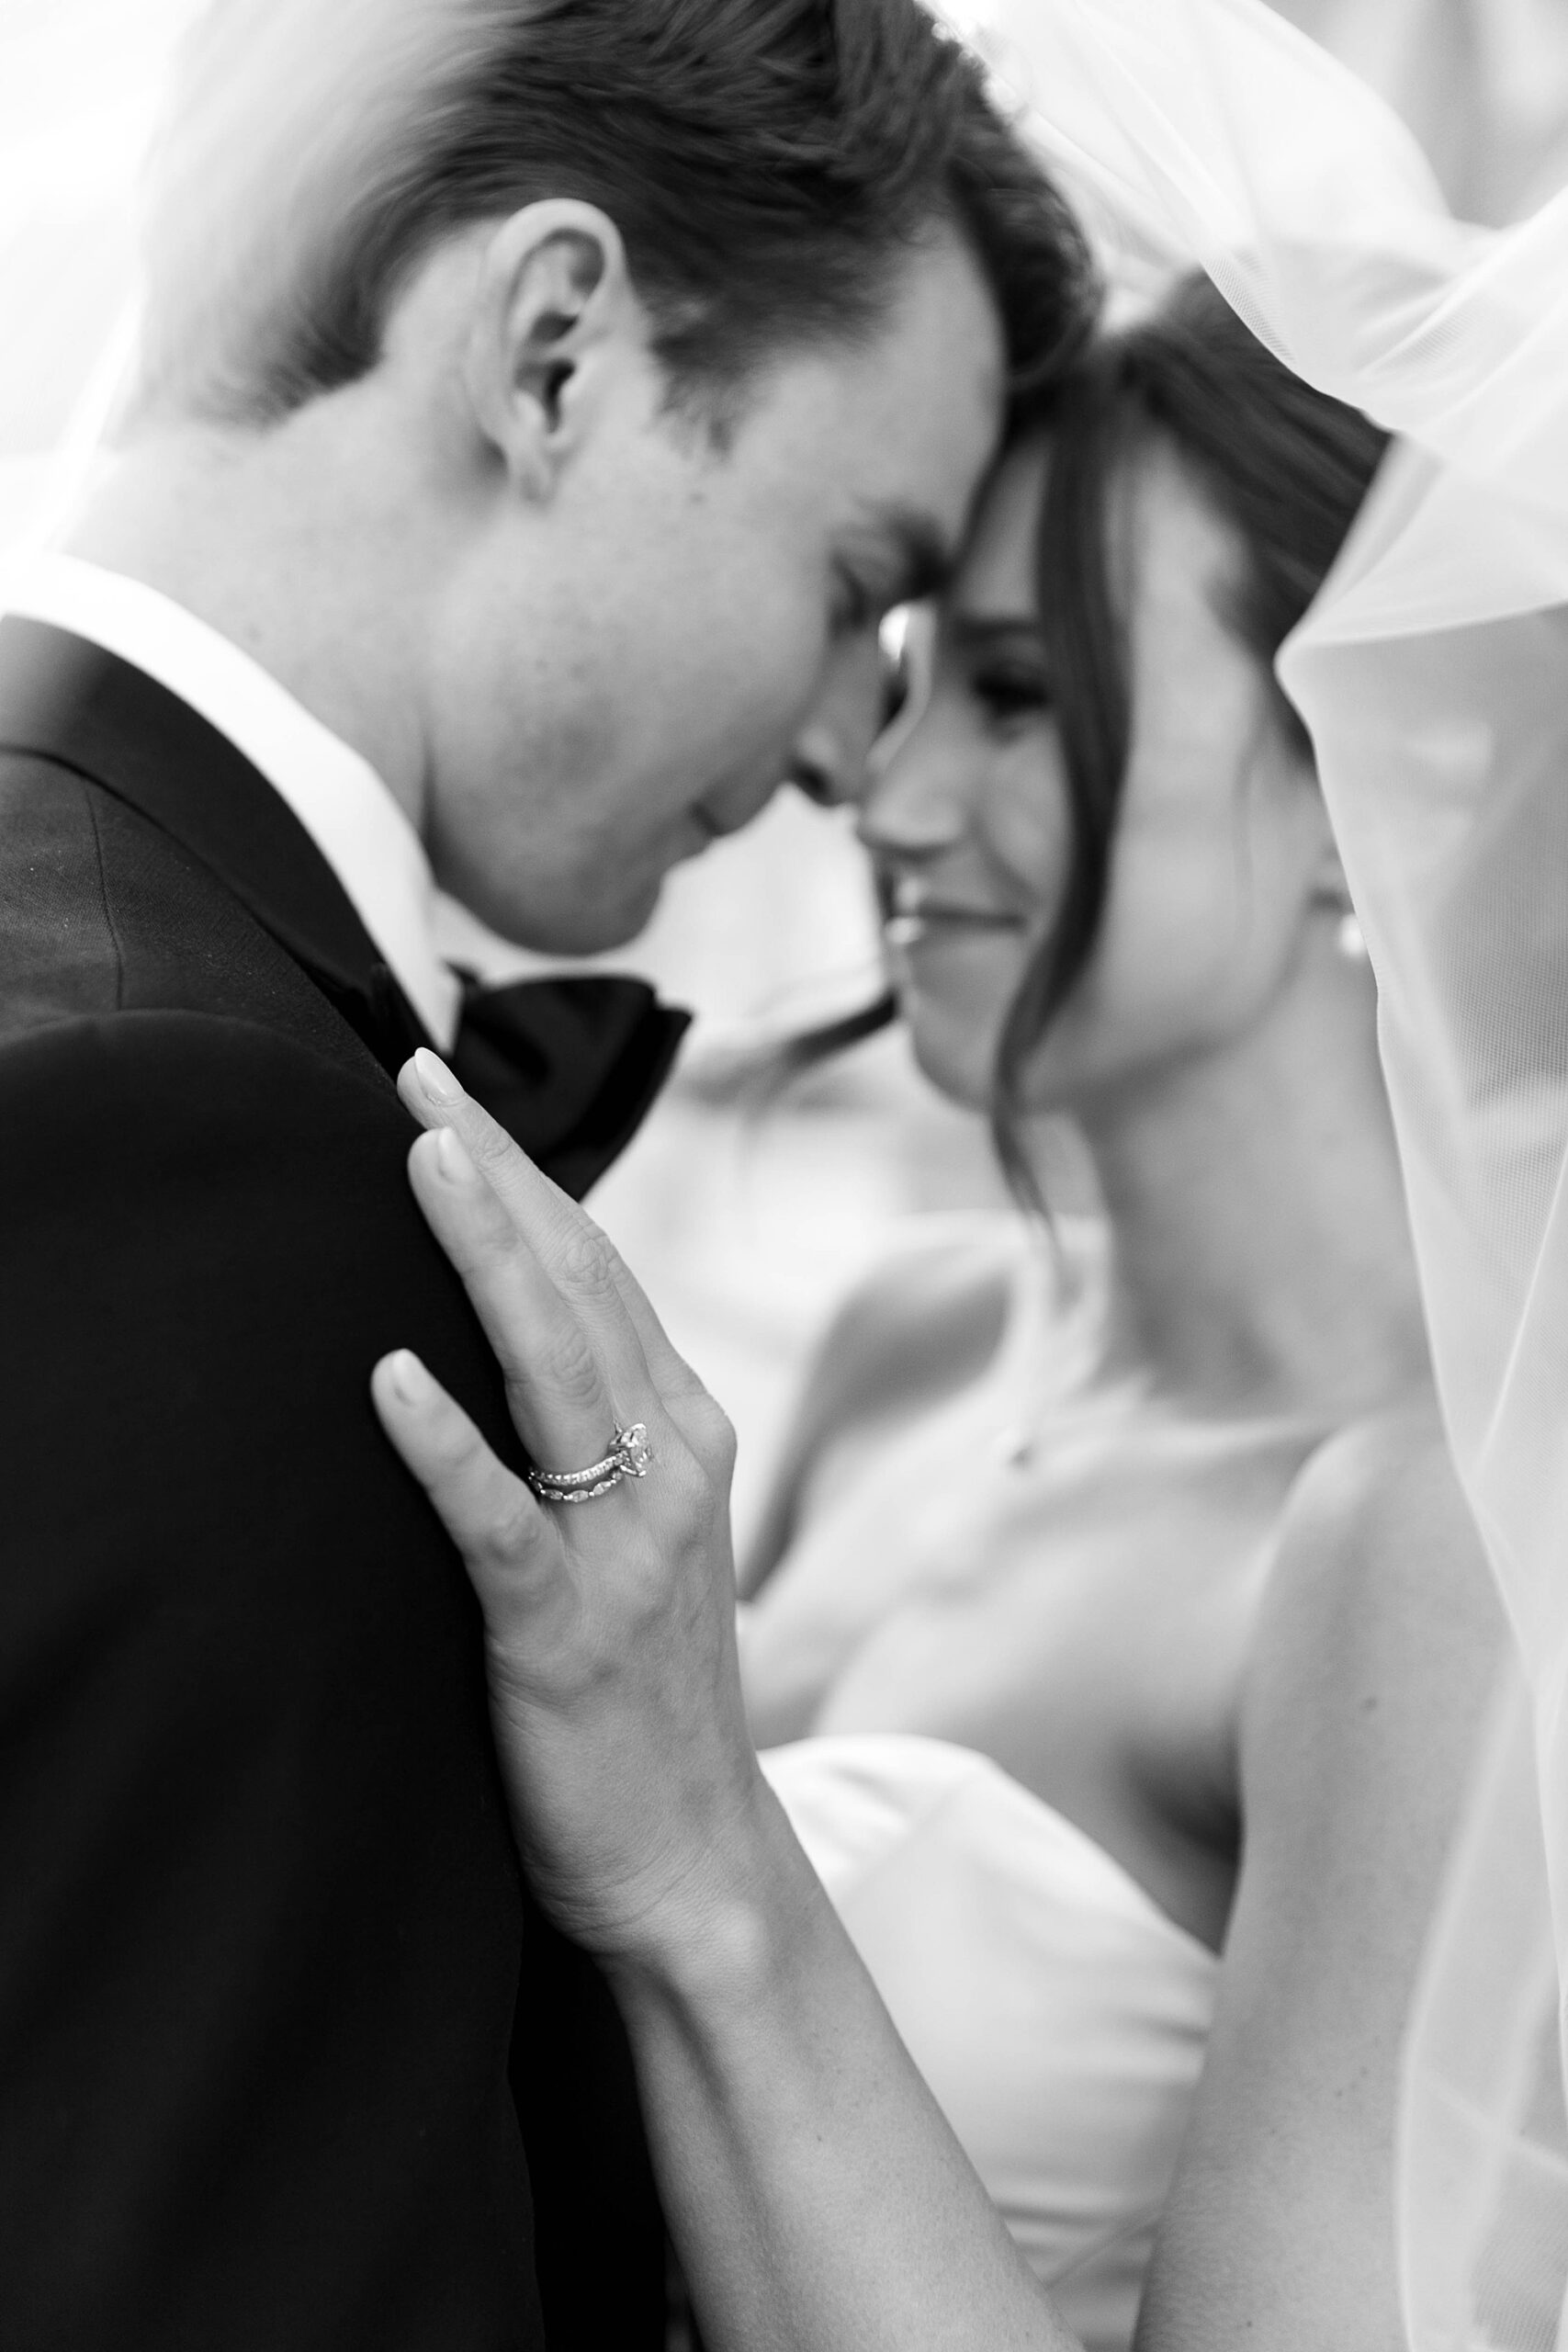 newlyweds hug while groom nuzzles forehead against bride